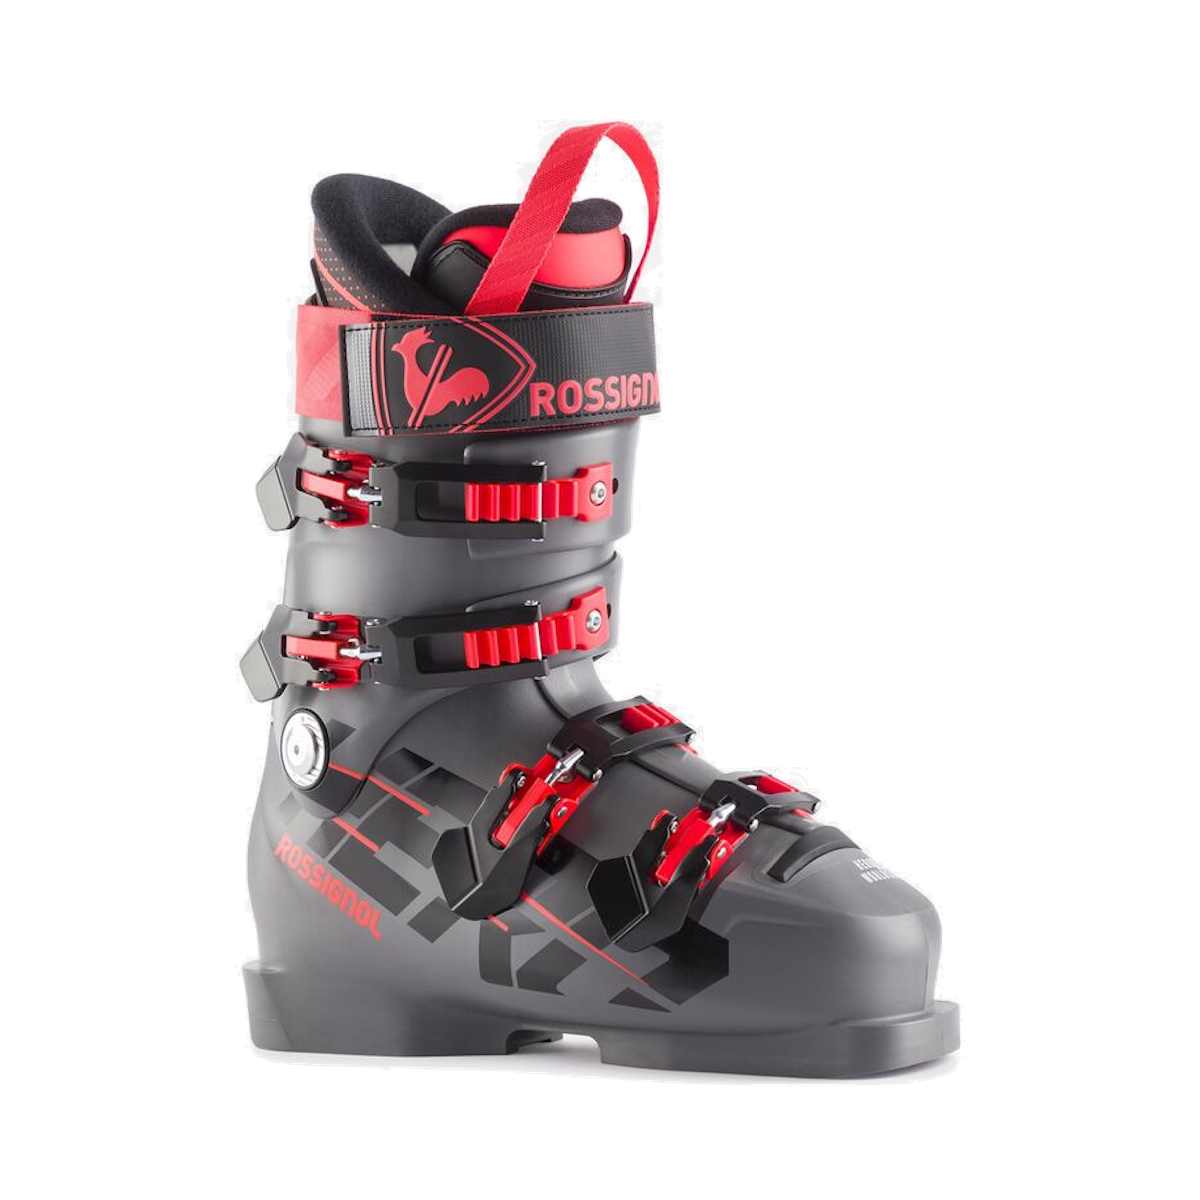 ROSSIGNOL HERO WORLD CUP 90 SC alpine ski boots - m.grey